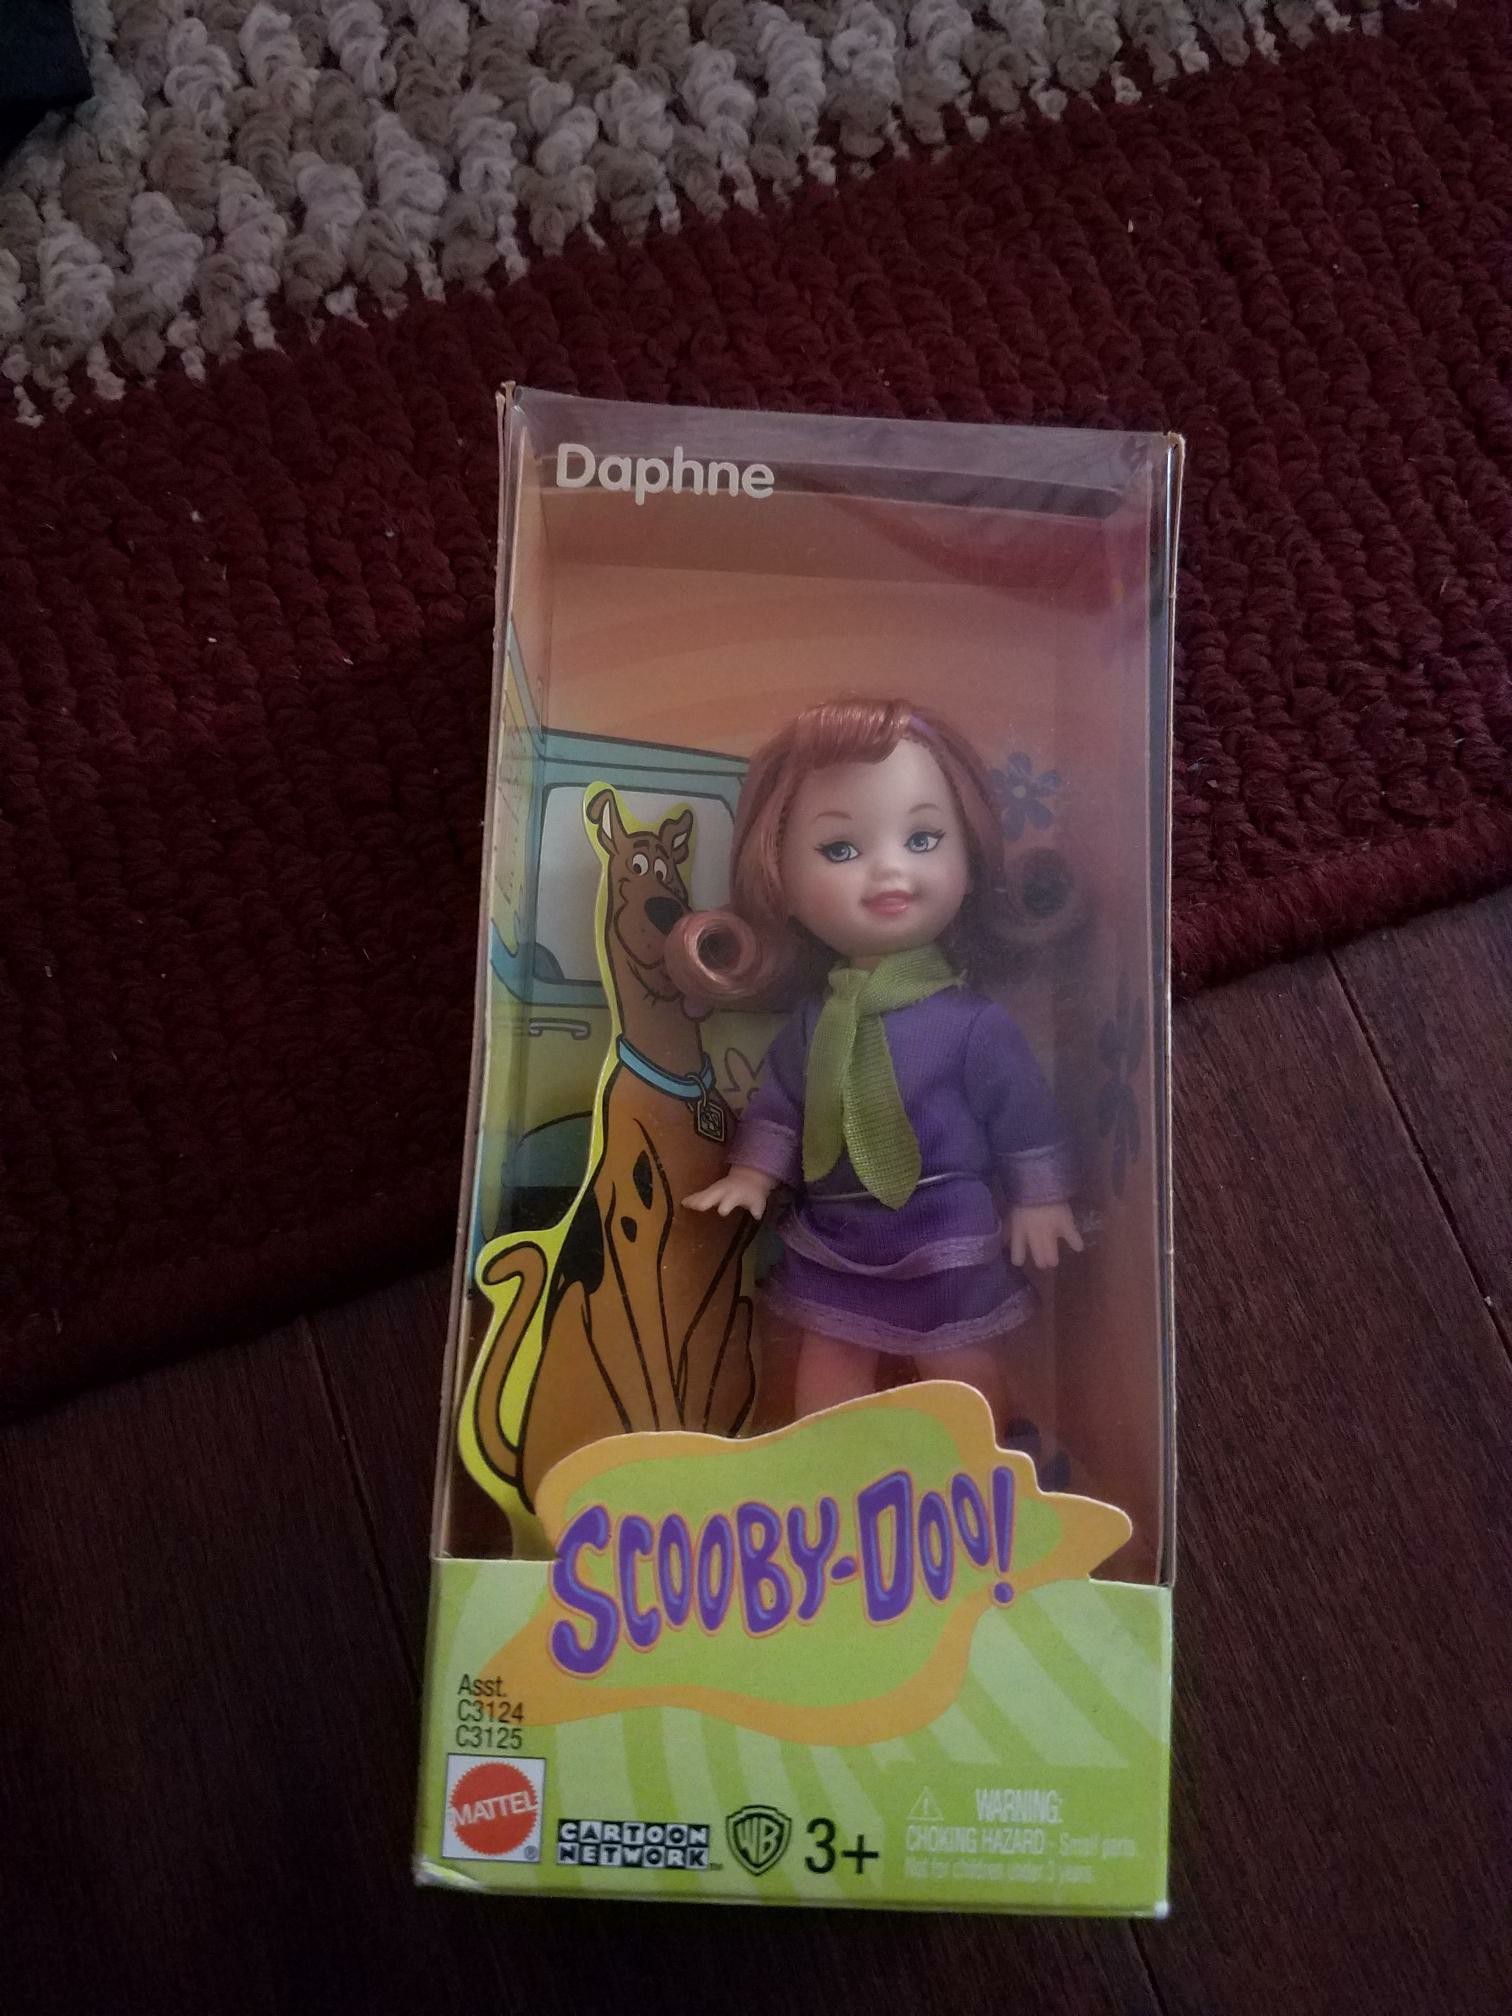 Daphne Scooby Doo Barbie